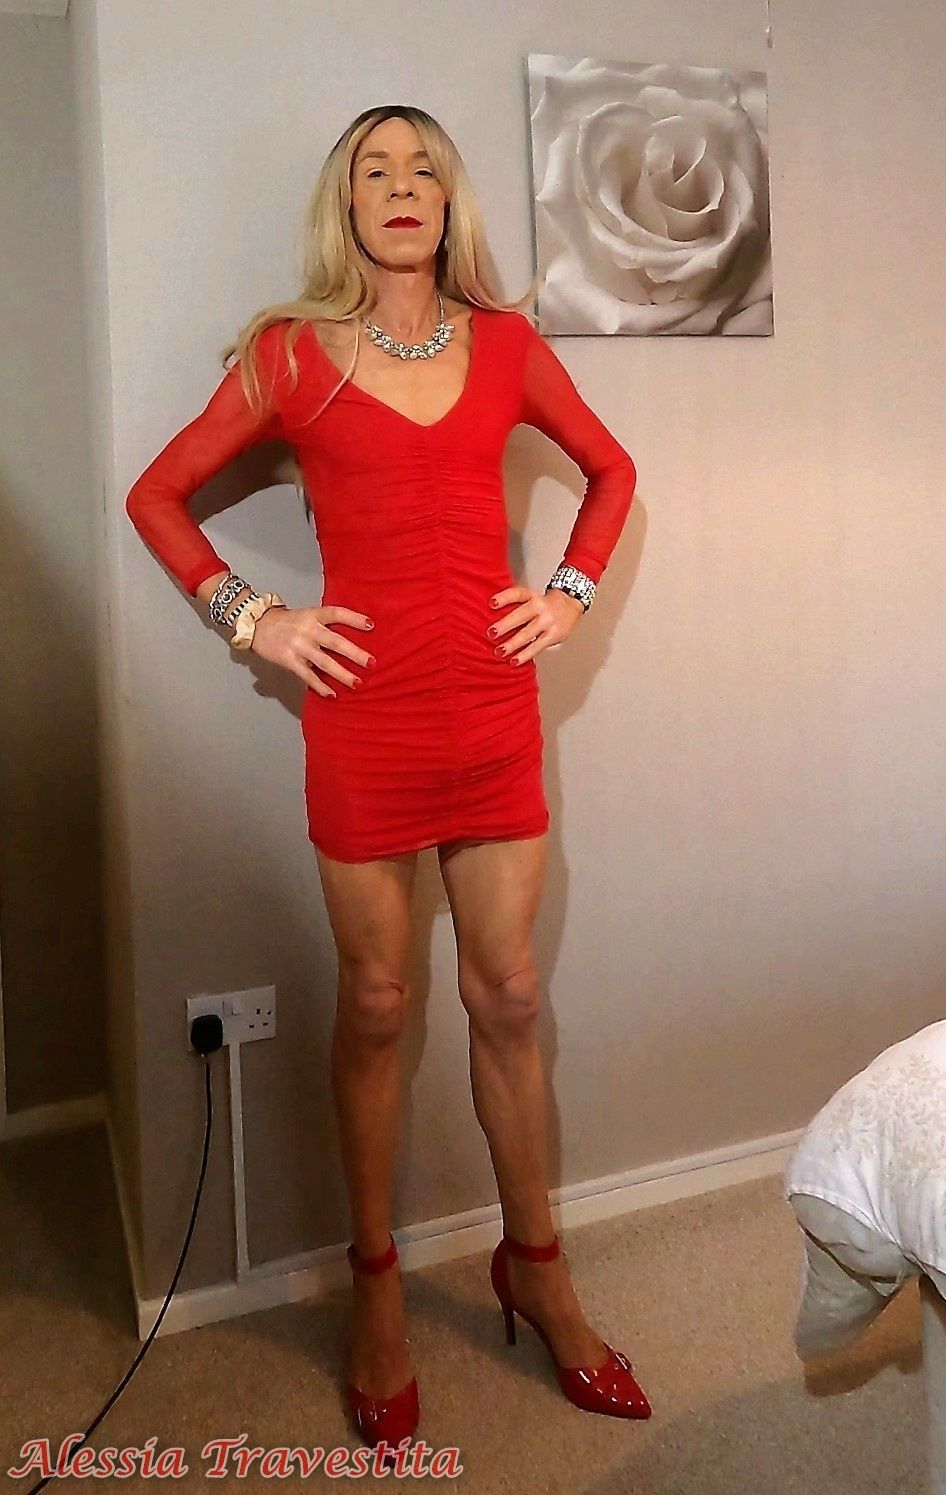 64 Alessia Travestita in Sheer Red Dress #15